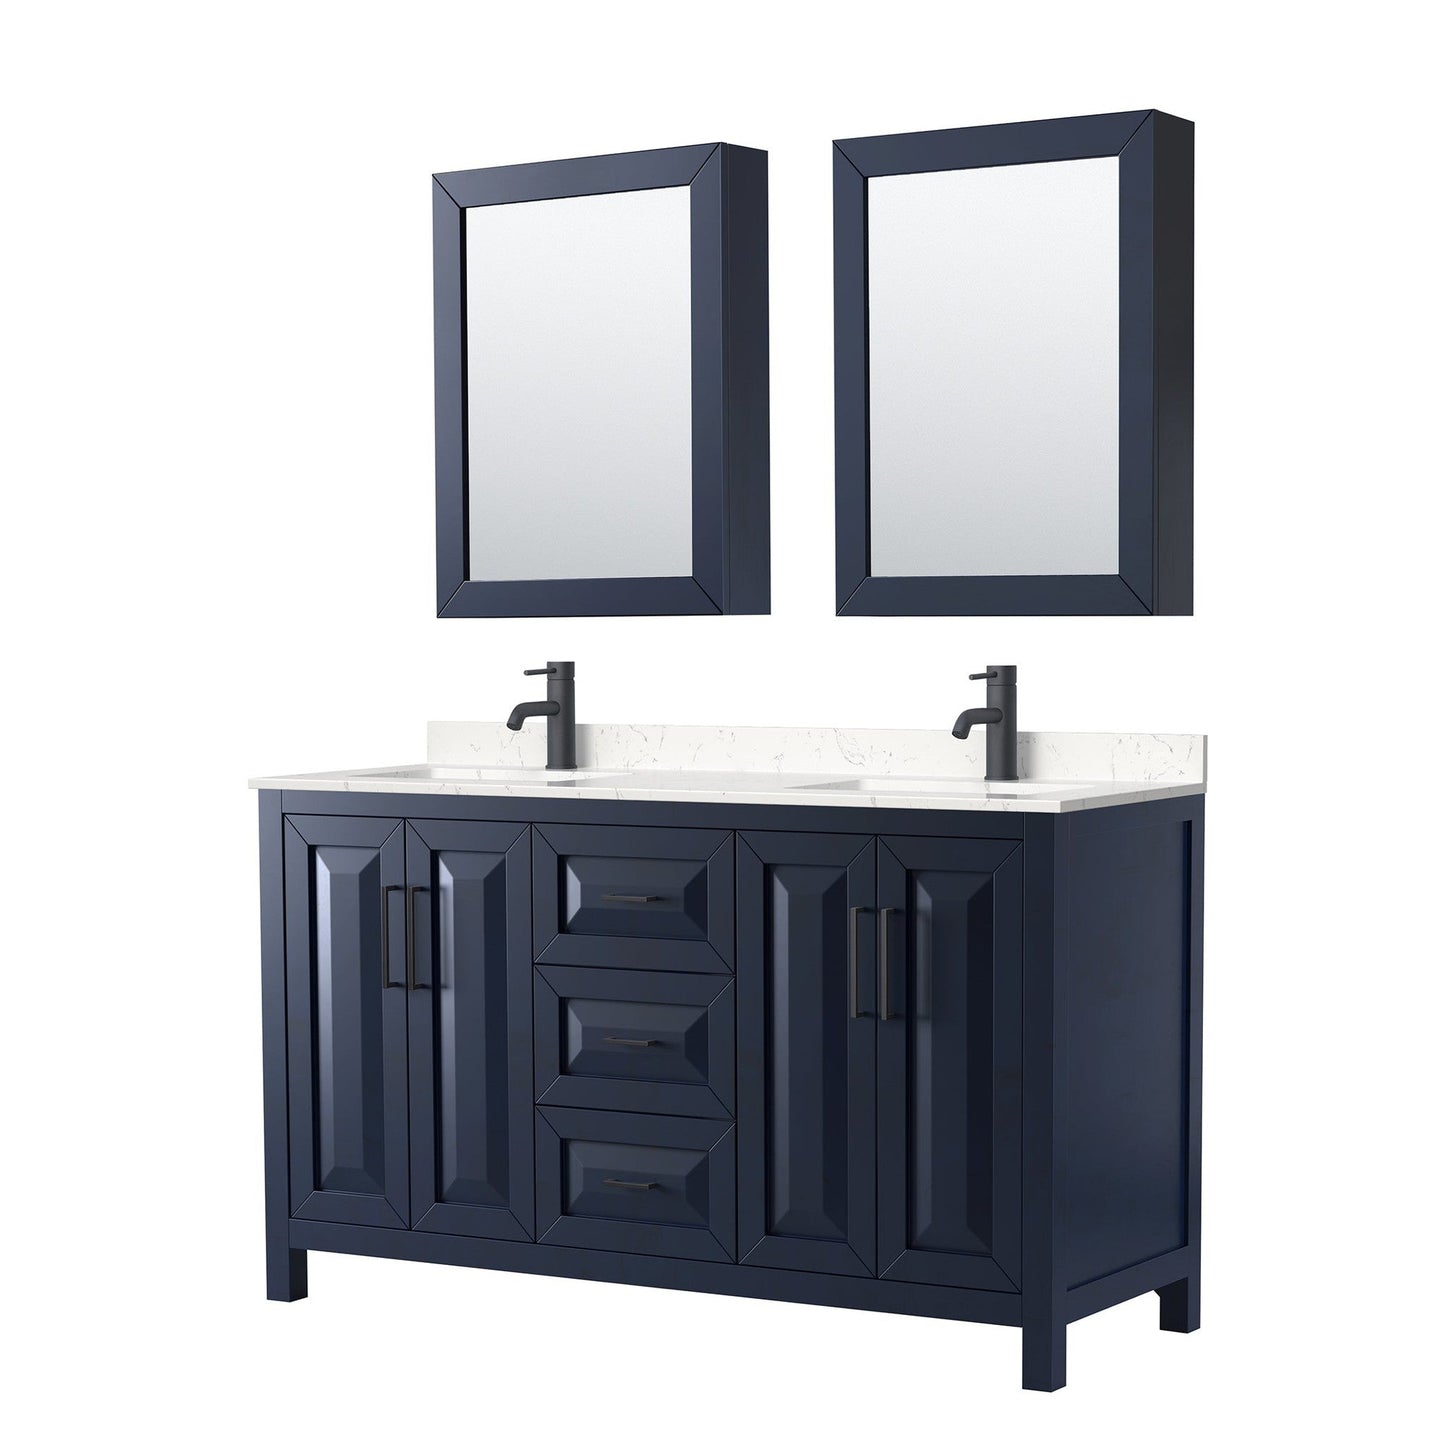 Daria 60" Double Bathroom Vanity in Dark Blue, Carrara Cultured Marble Countertop, Undermount Square Sinks, Matte Black Trim, Medicine Cabinets